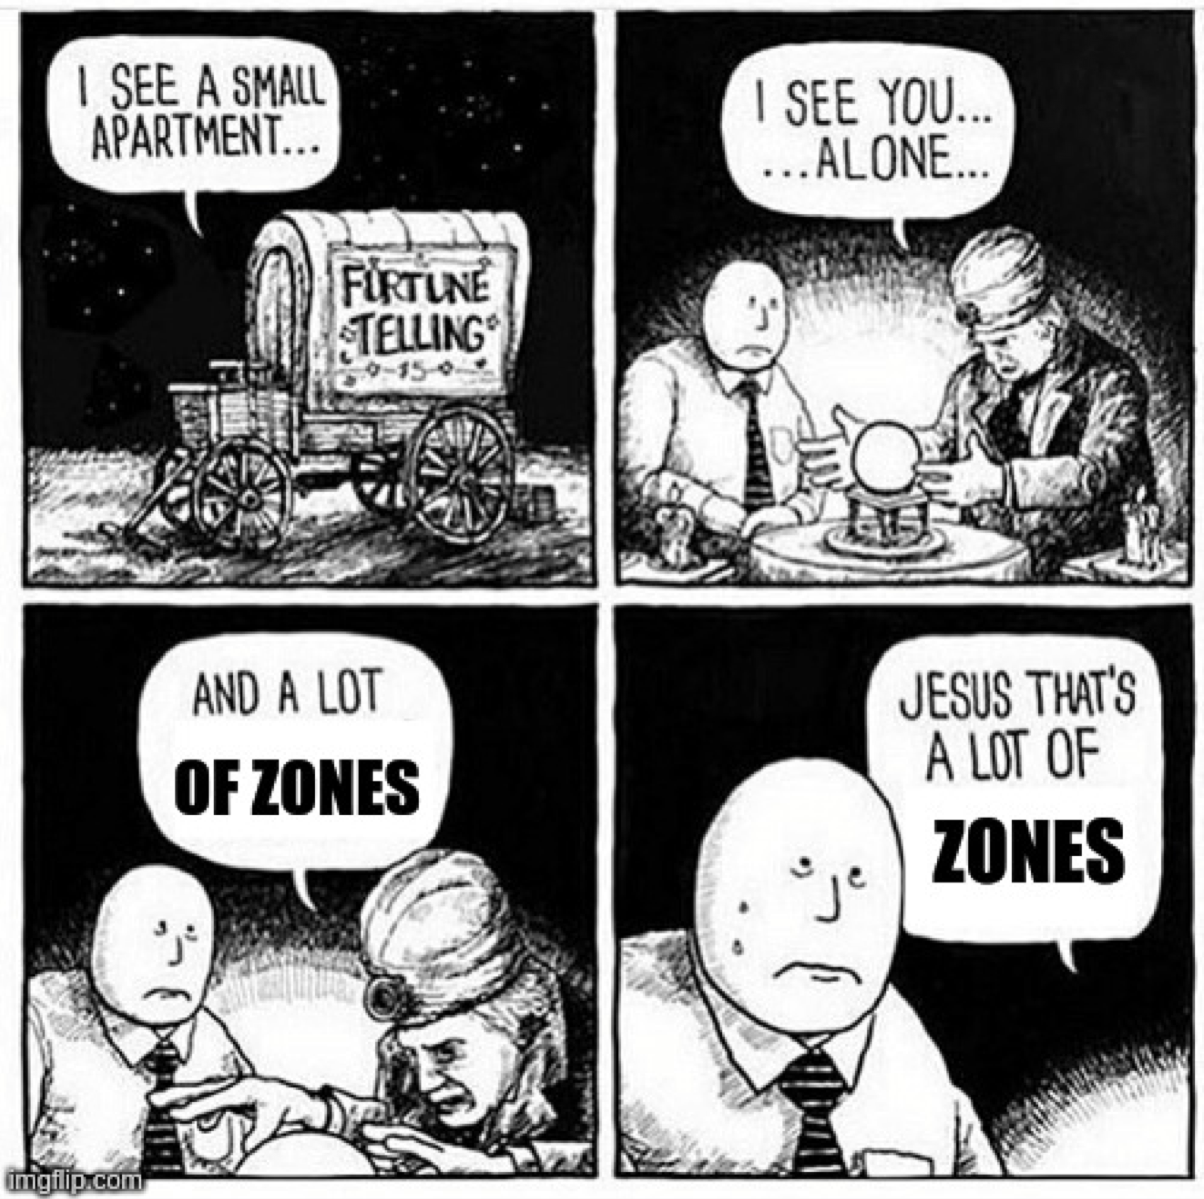 "lots of zones" meme